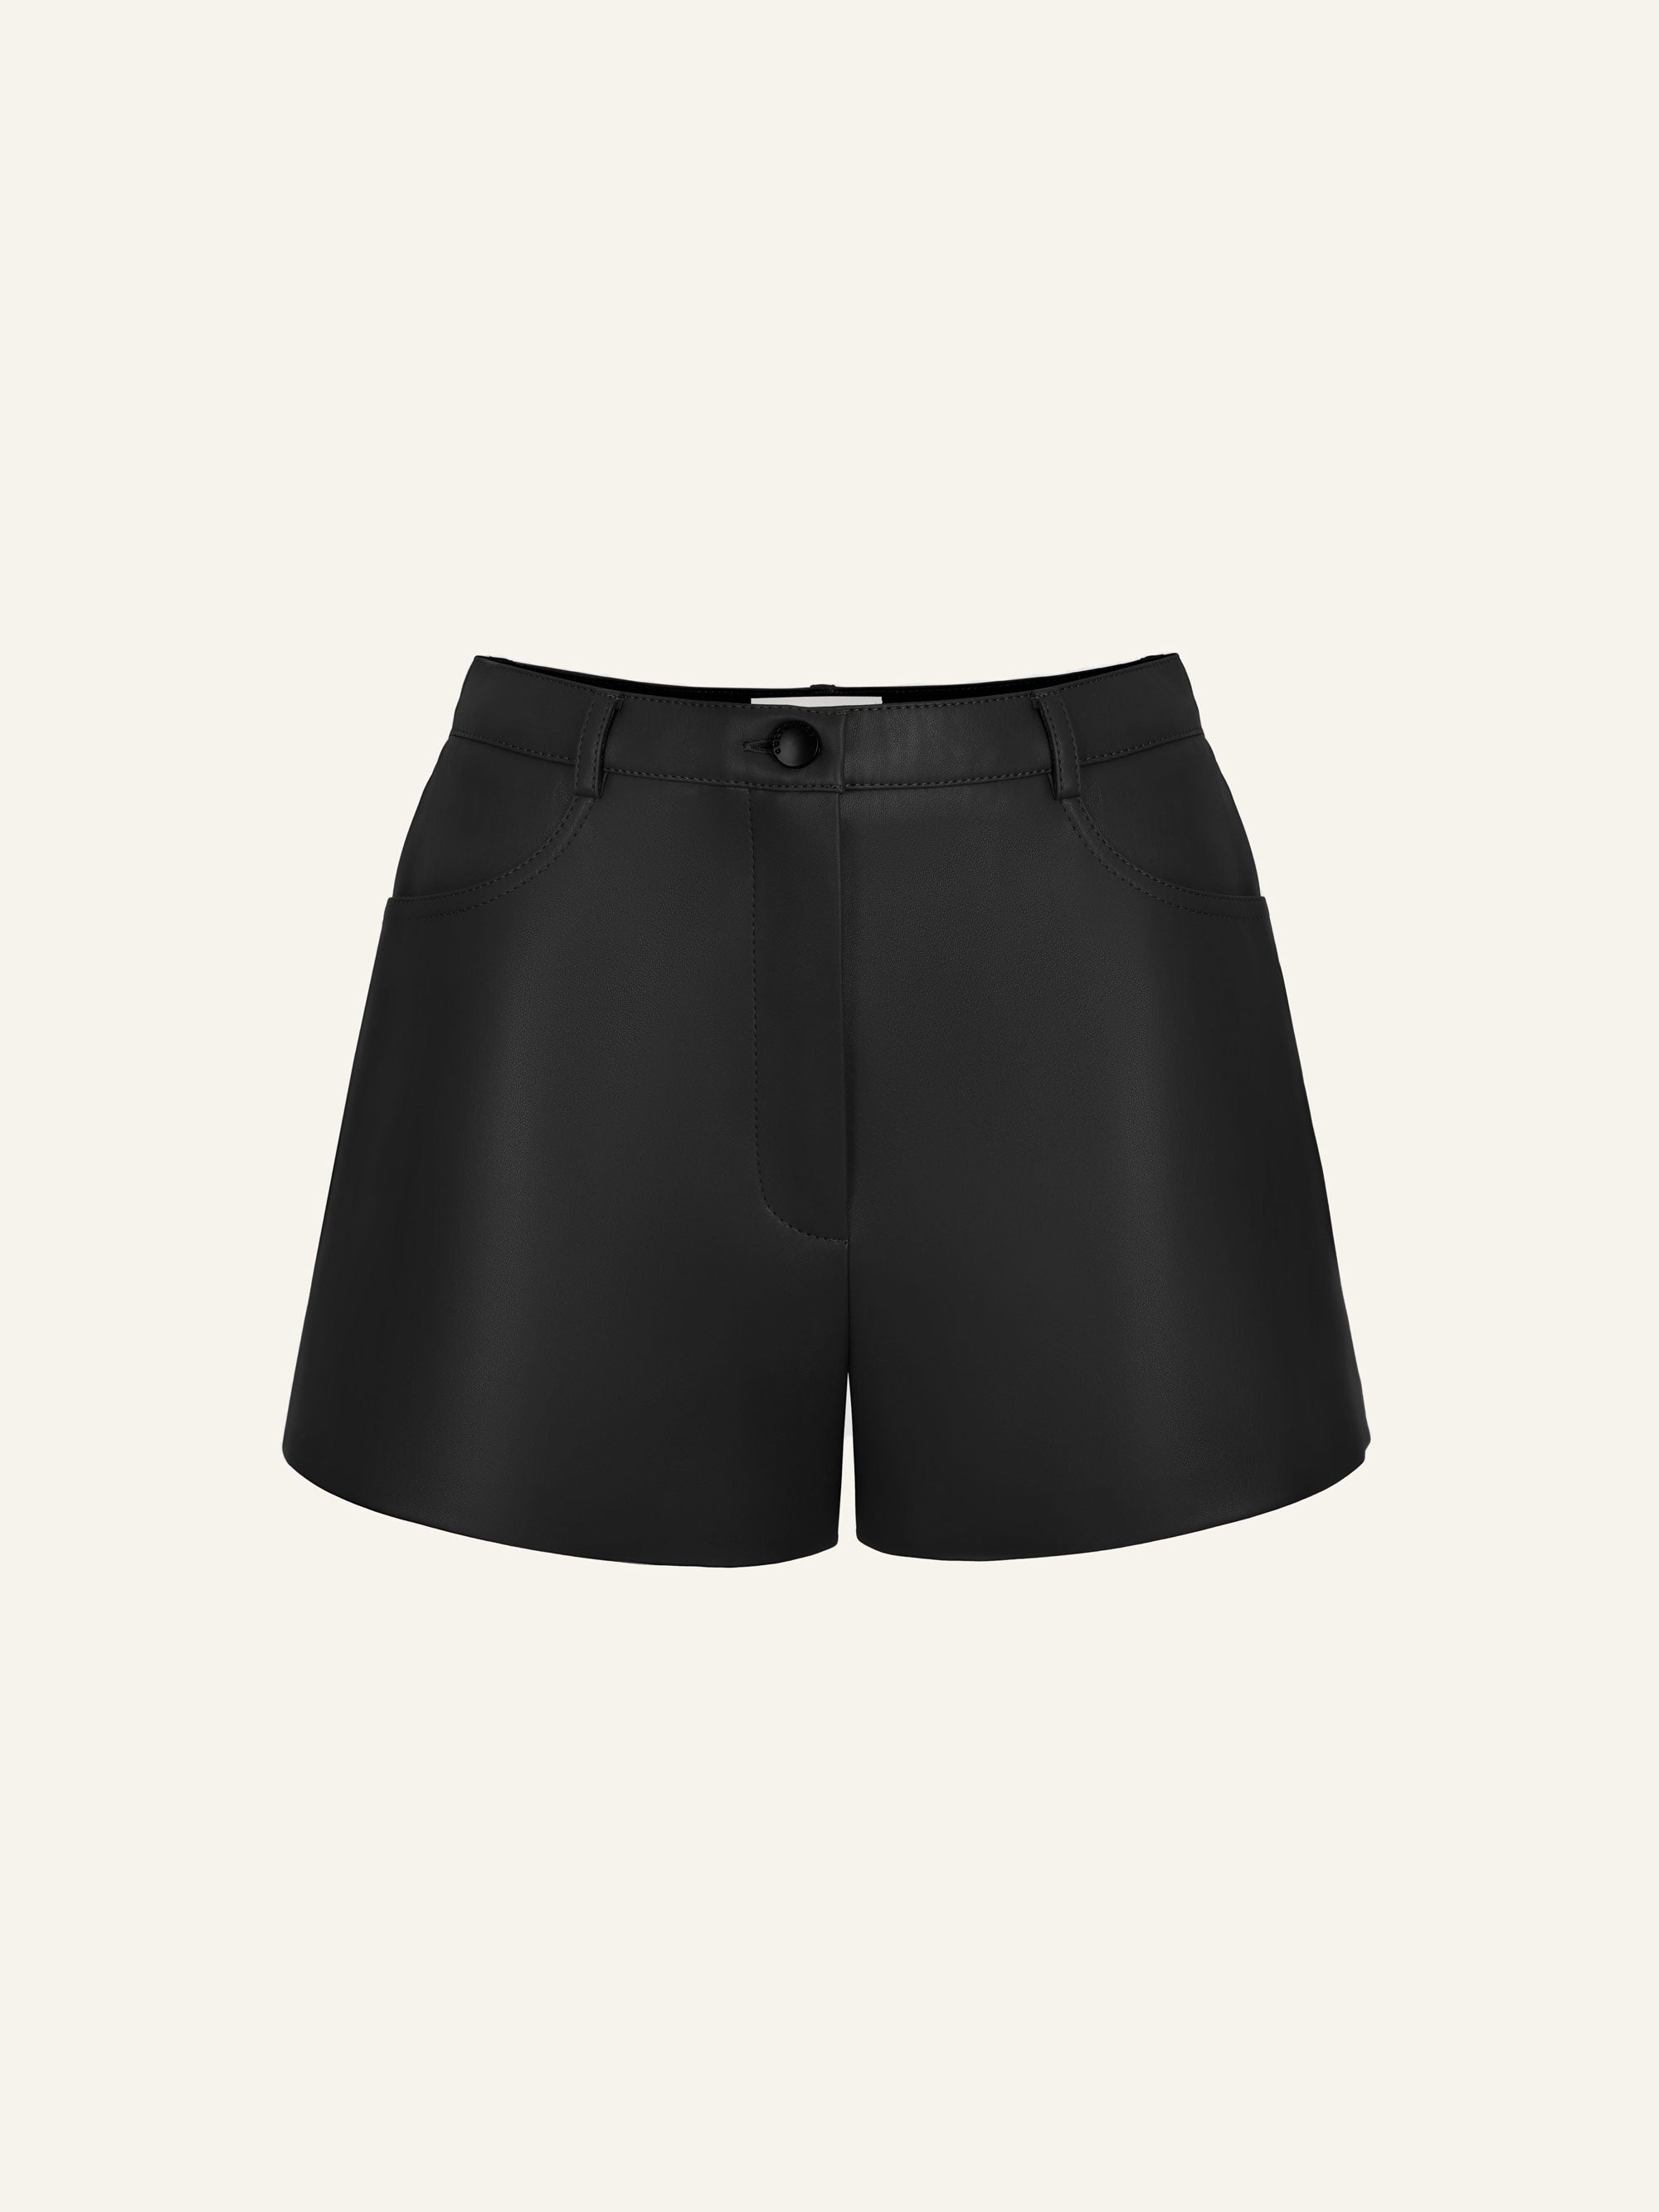 Product photo of black vegan leather high rise shorts